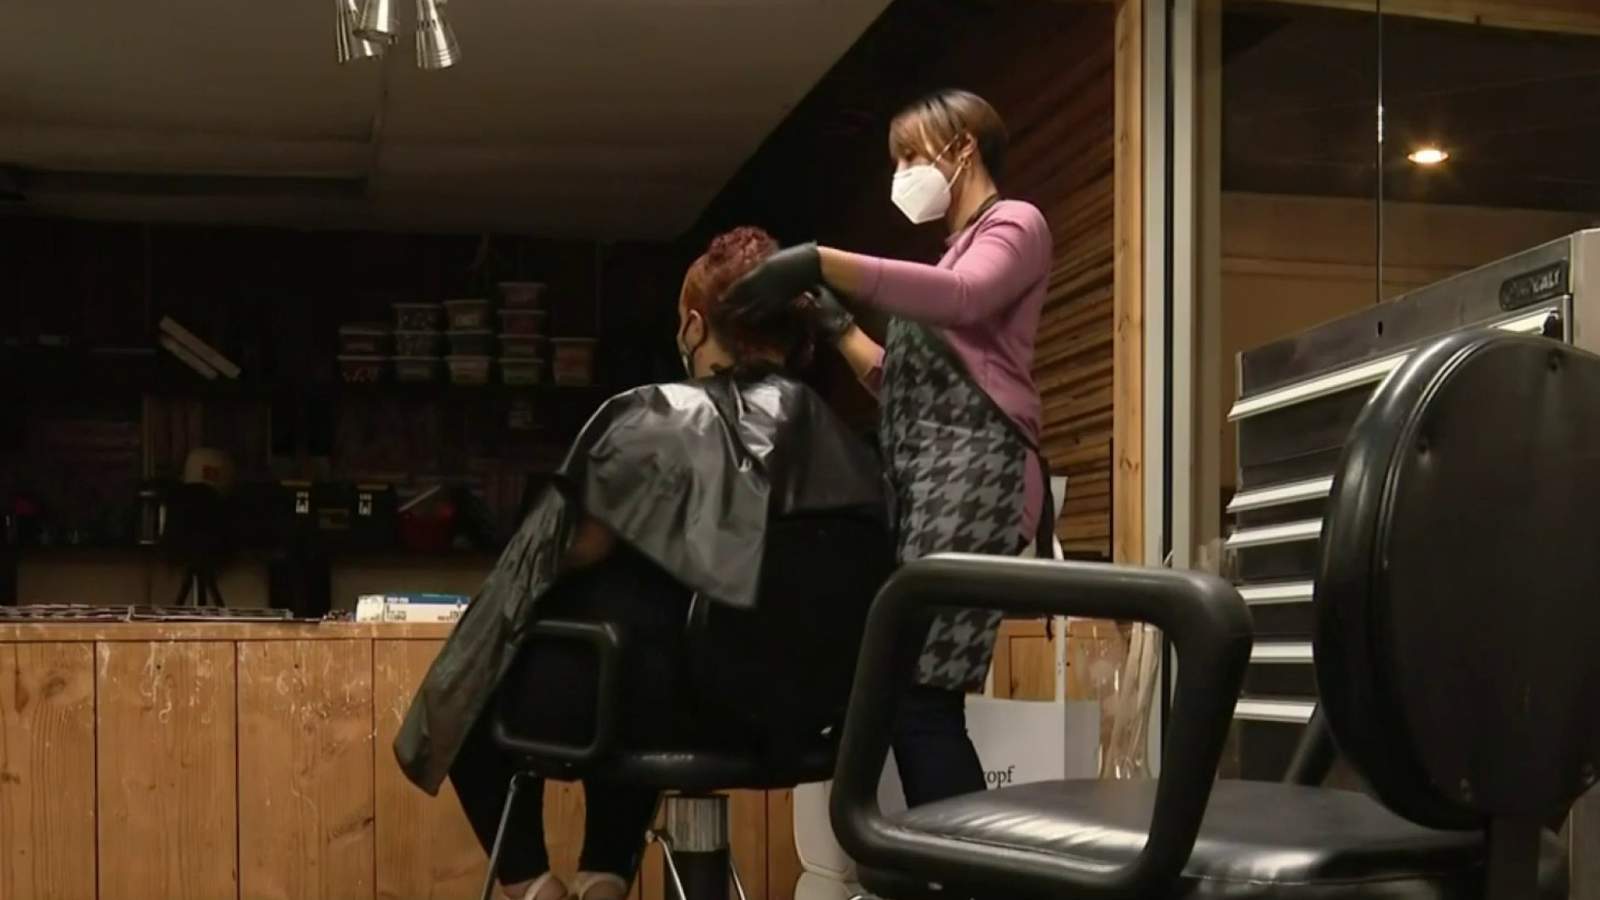 Detroit’s Census push moves into city’s barber shops, salons